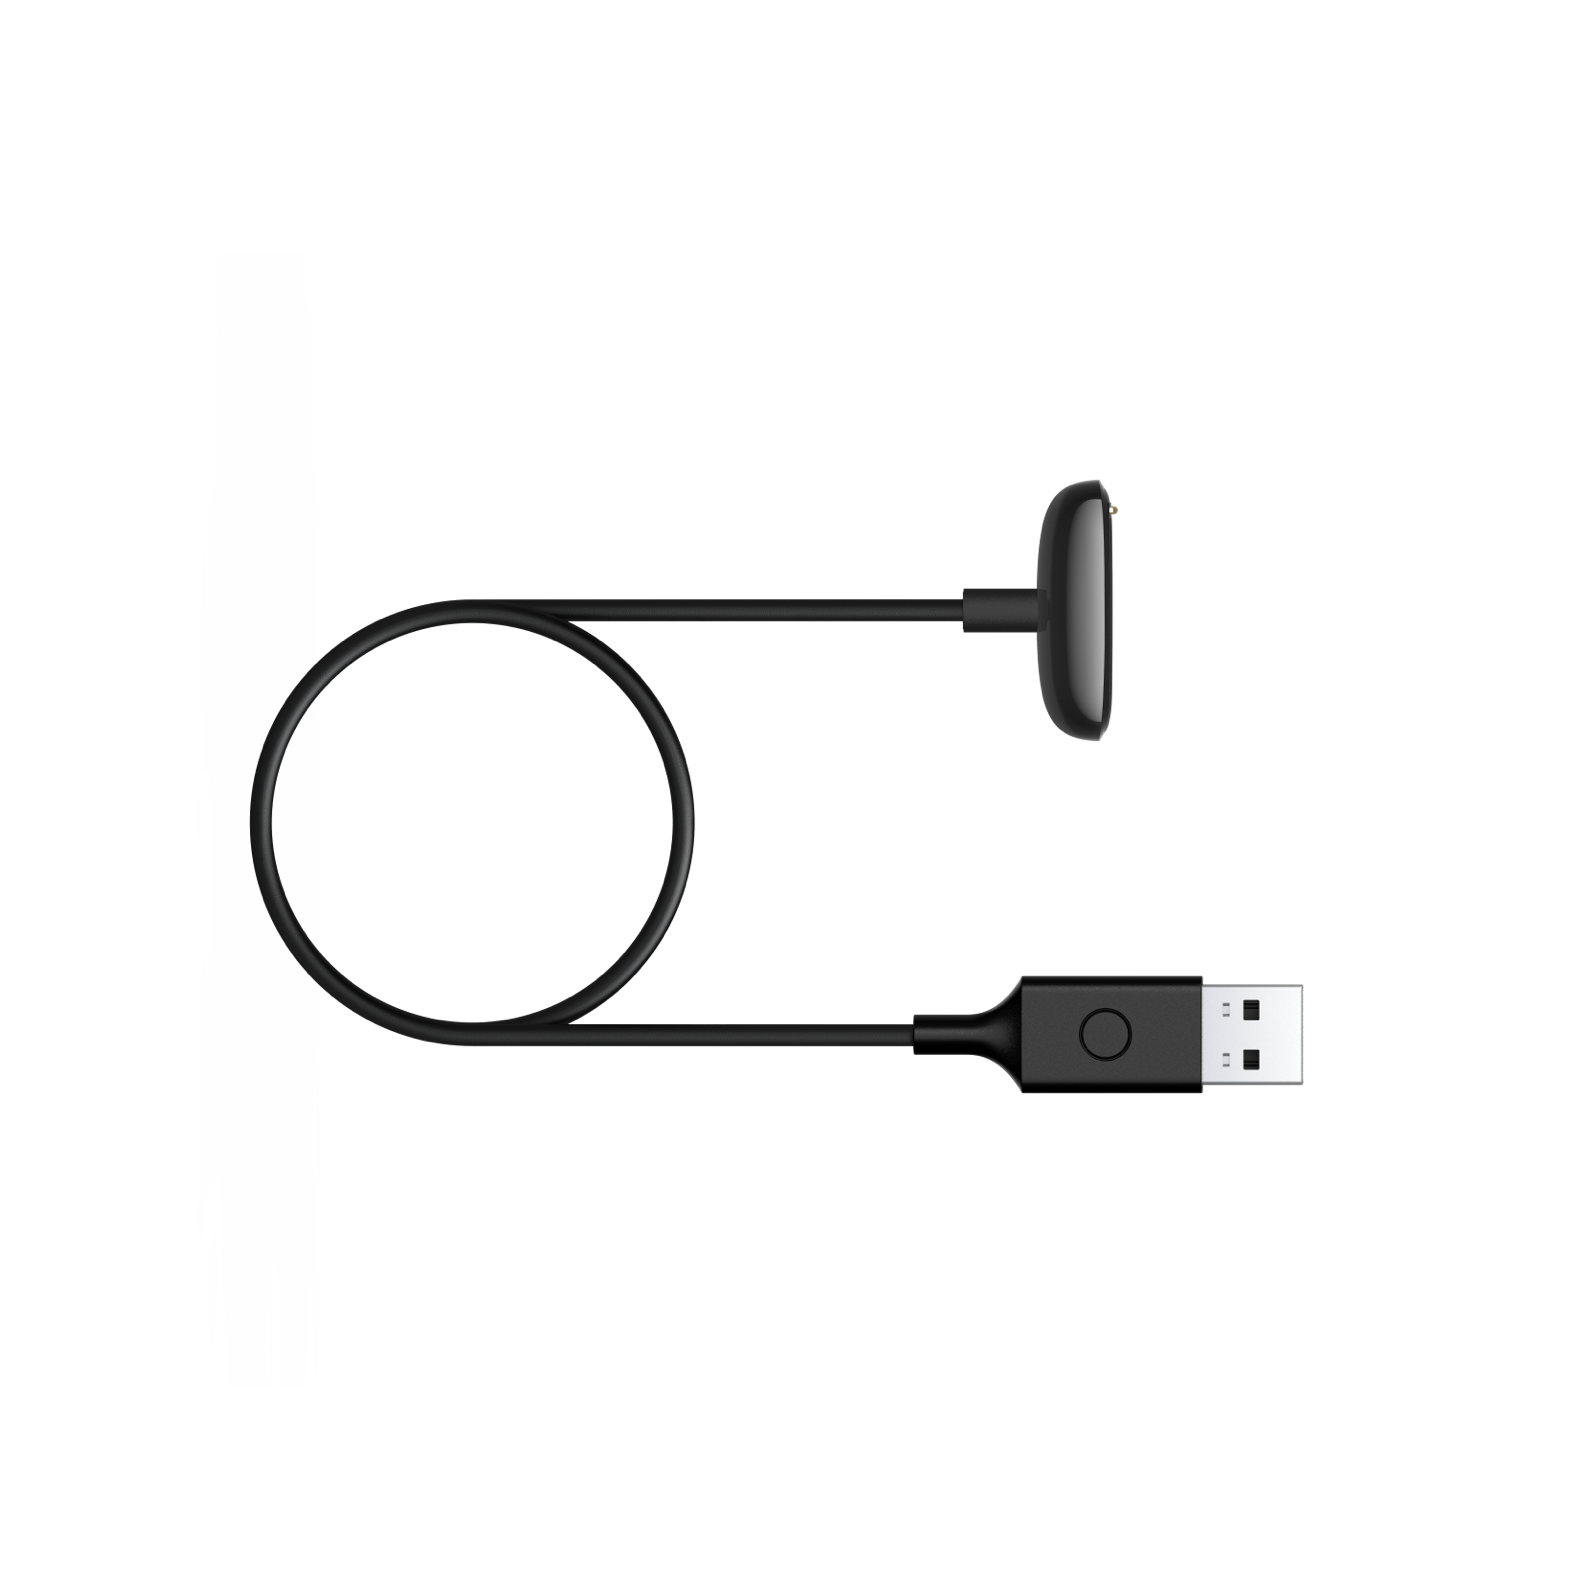 Ladekabel für fit_bit Luxe USB Ladekabel Adapter für fit_bit Luxe Smart Armband Ladekabel für fit_bit Luxe Ladeclip Ladeadapter 